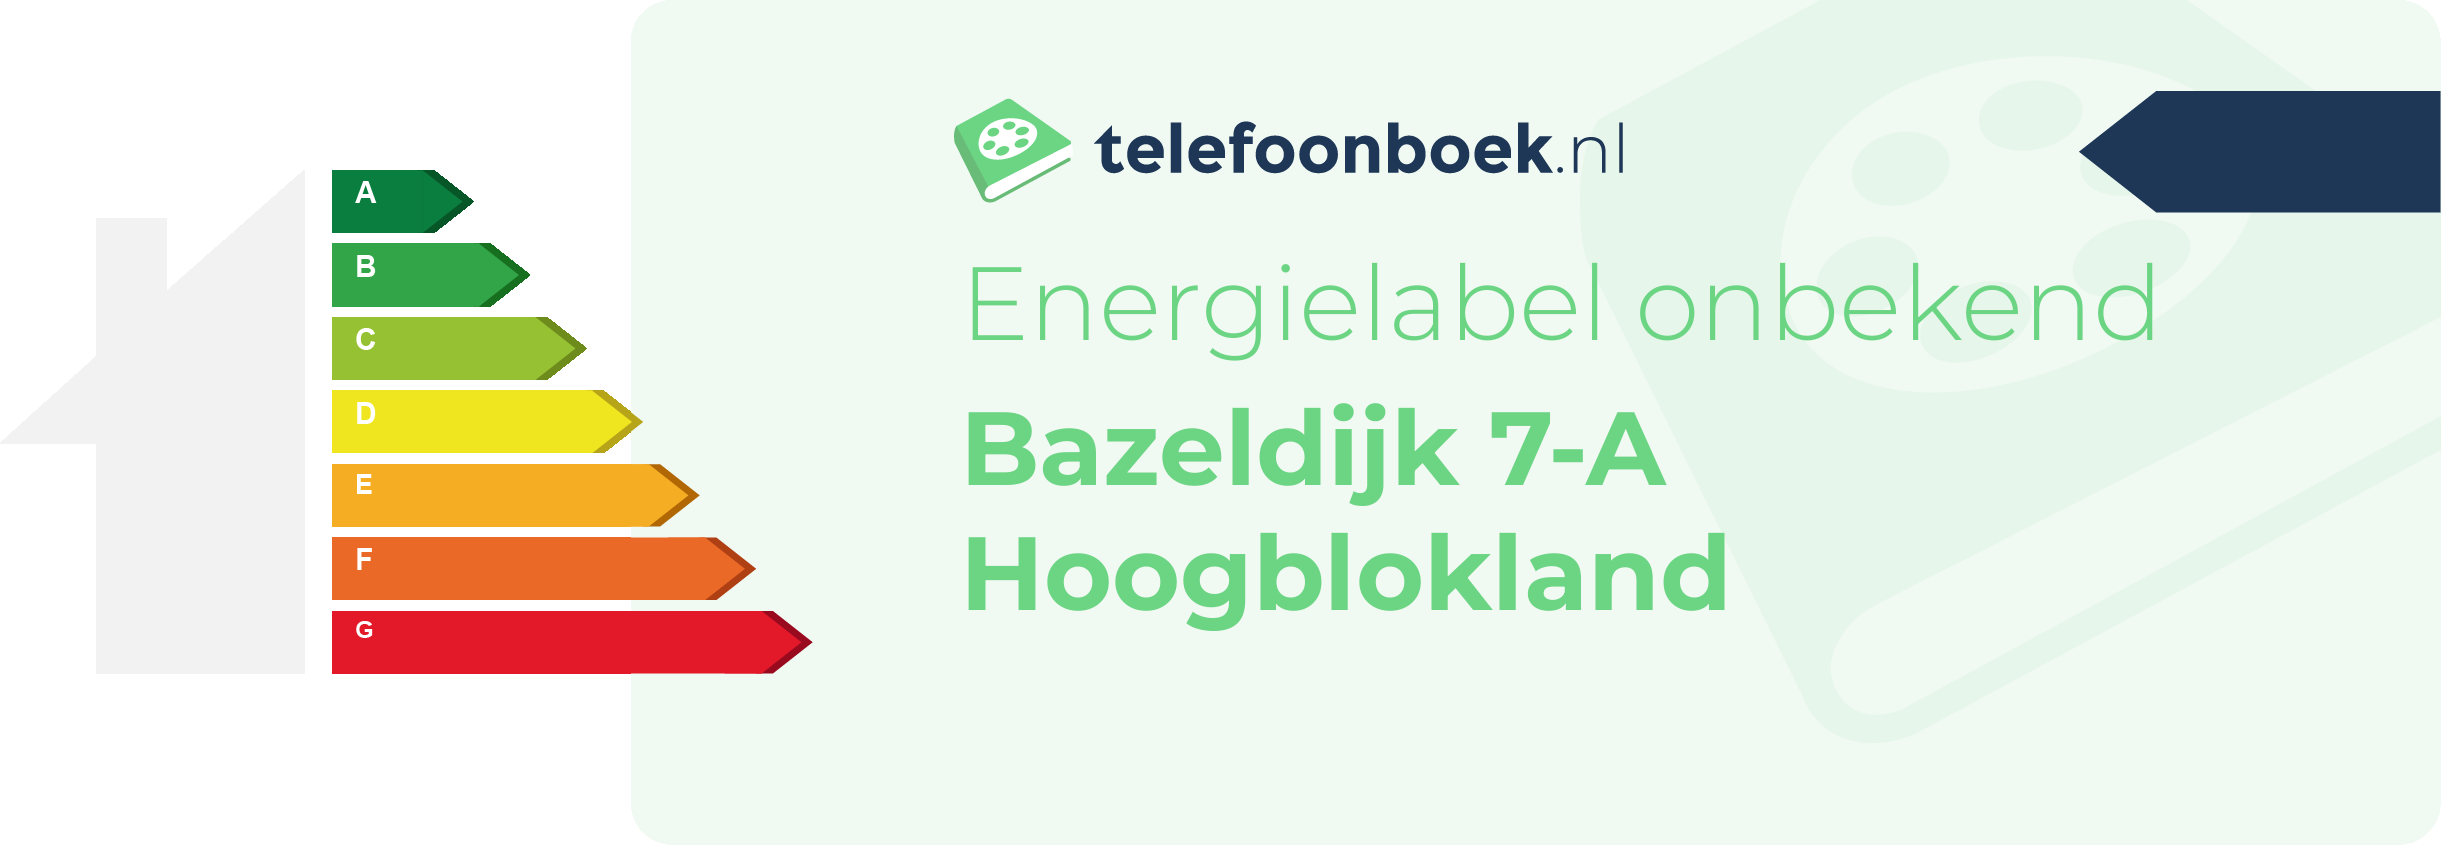 Energielabel Bazeldijk 7-A Hoogblokland